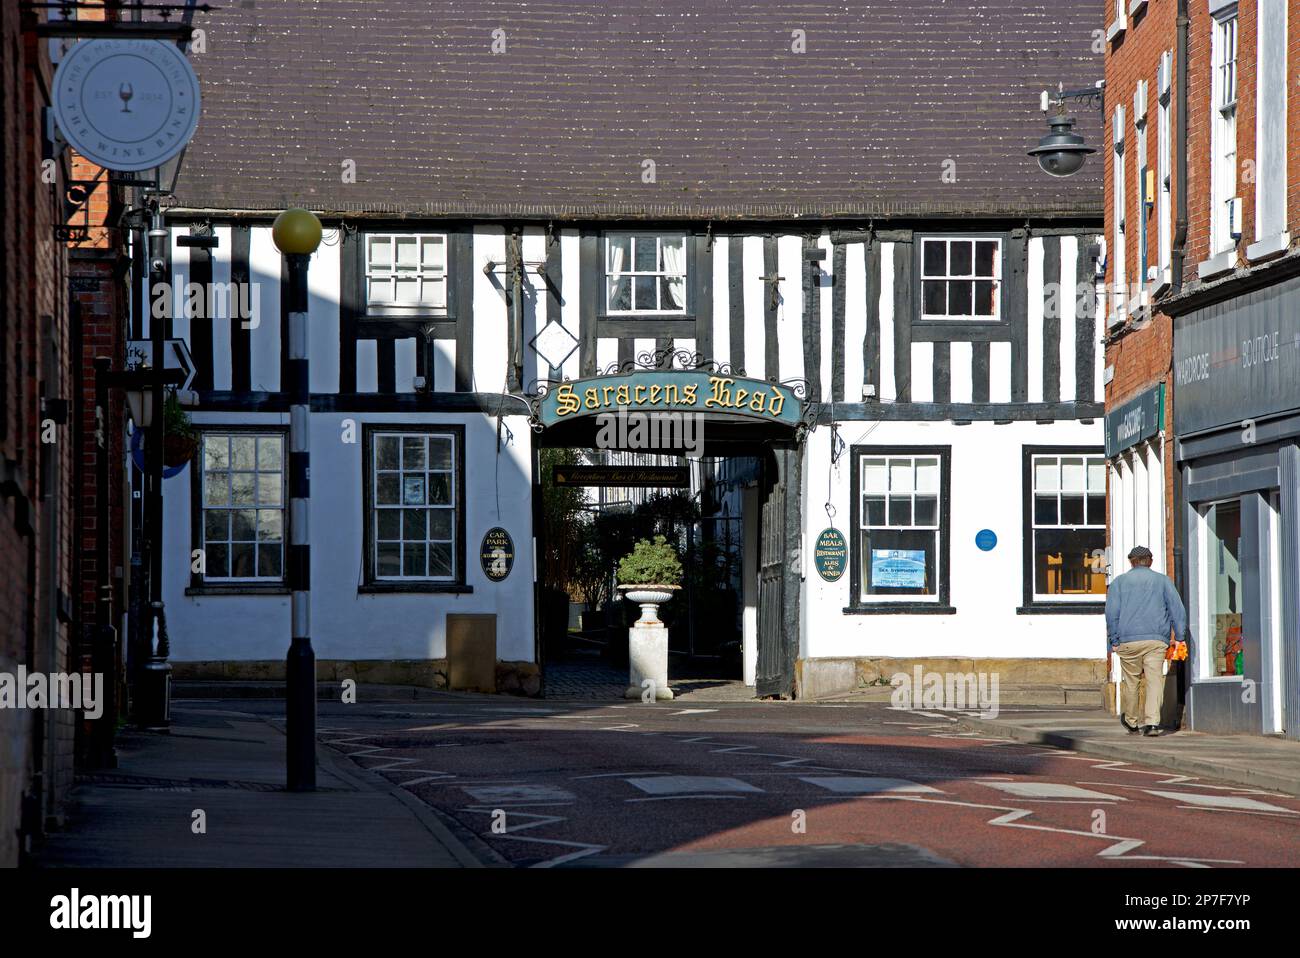 The Saracens Head coacing inn on Church Street, Southwell, Nottinghamshire, England UK Stock Photo